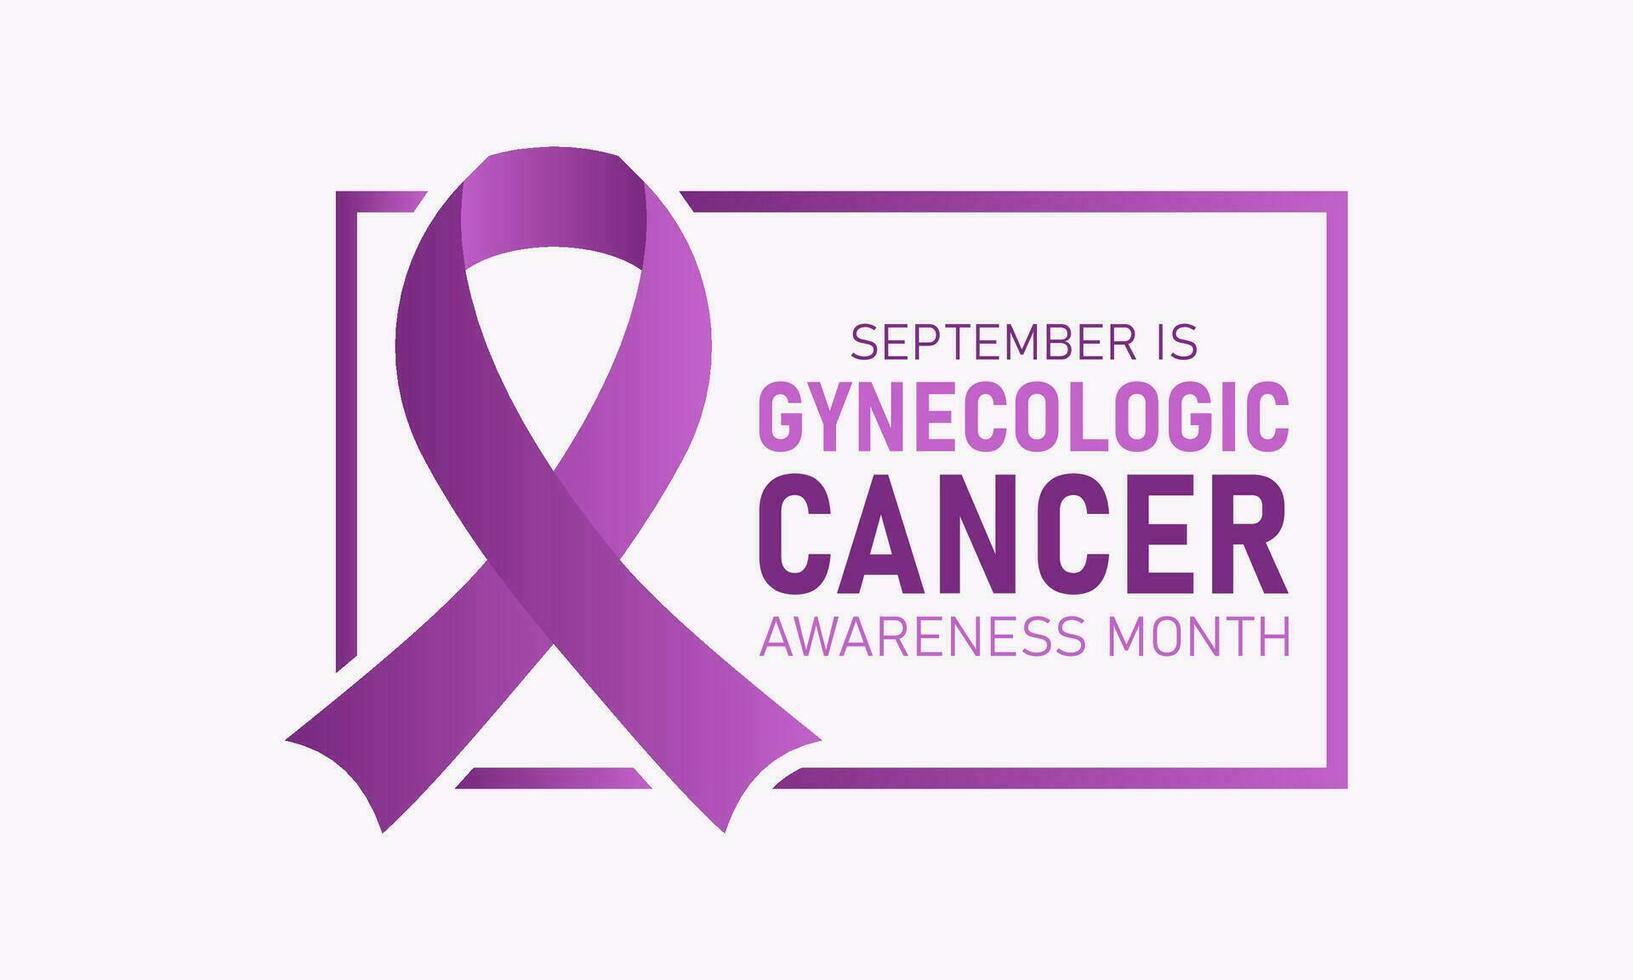 ginecológico cáncer conciencia mes es observado cada año en septiembre. hembra reproductivo sistema símbolo. modelo para bandera, tarjeta, antecedentes. vector ilustración.